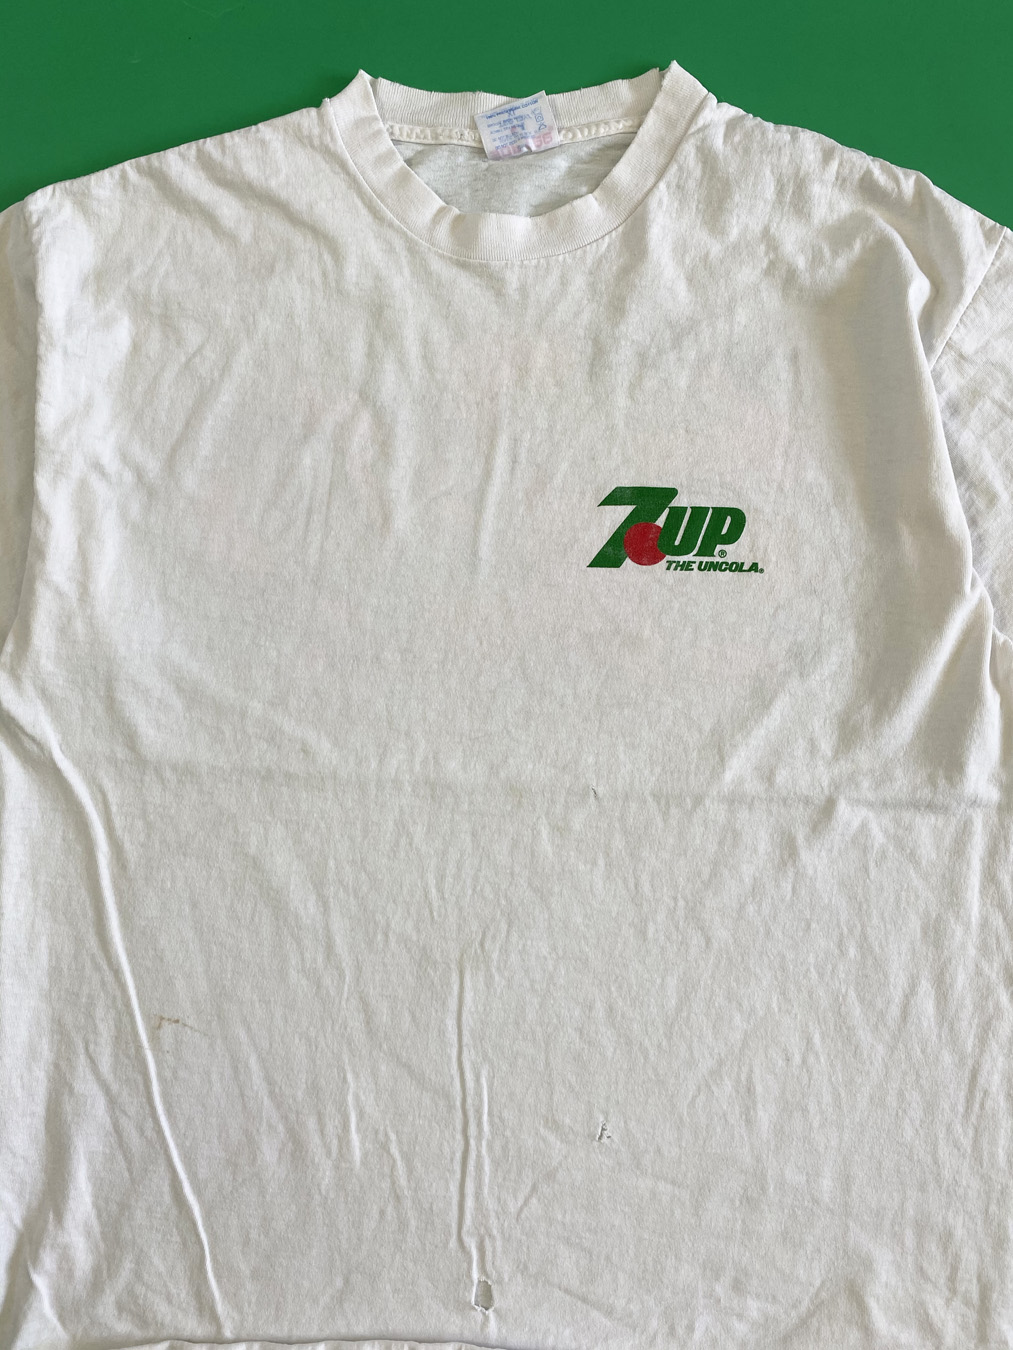 1991 7up Uncola White T-Shirt - 5 Star Vintage